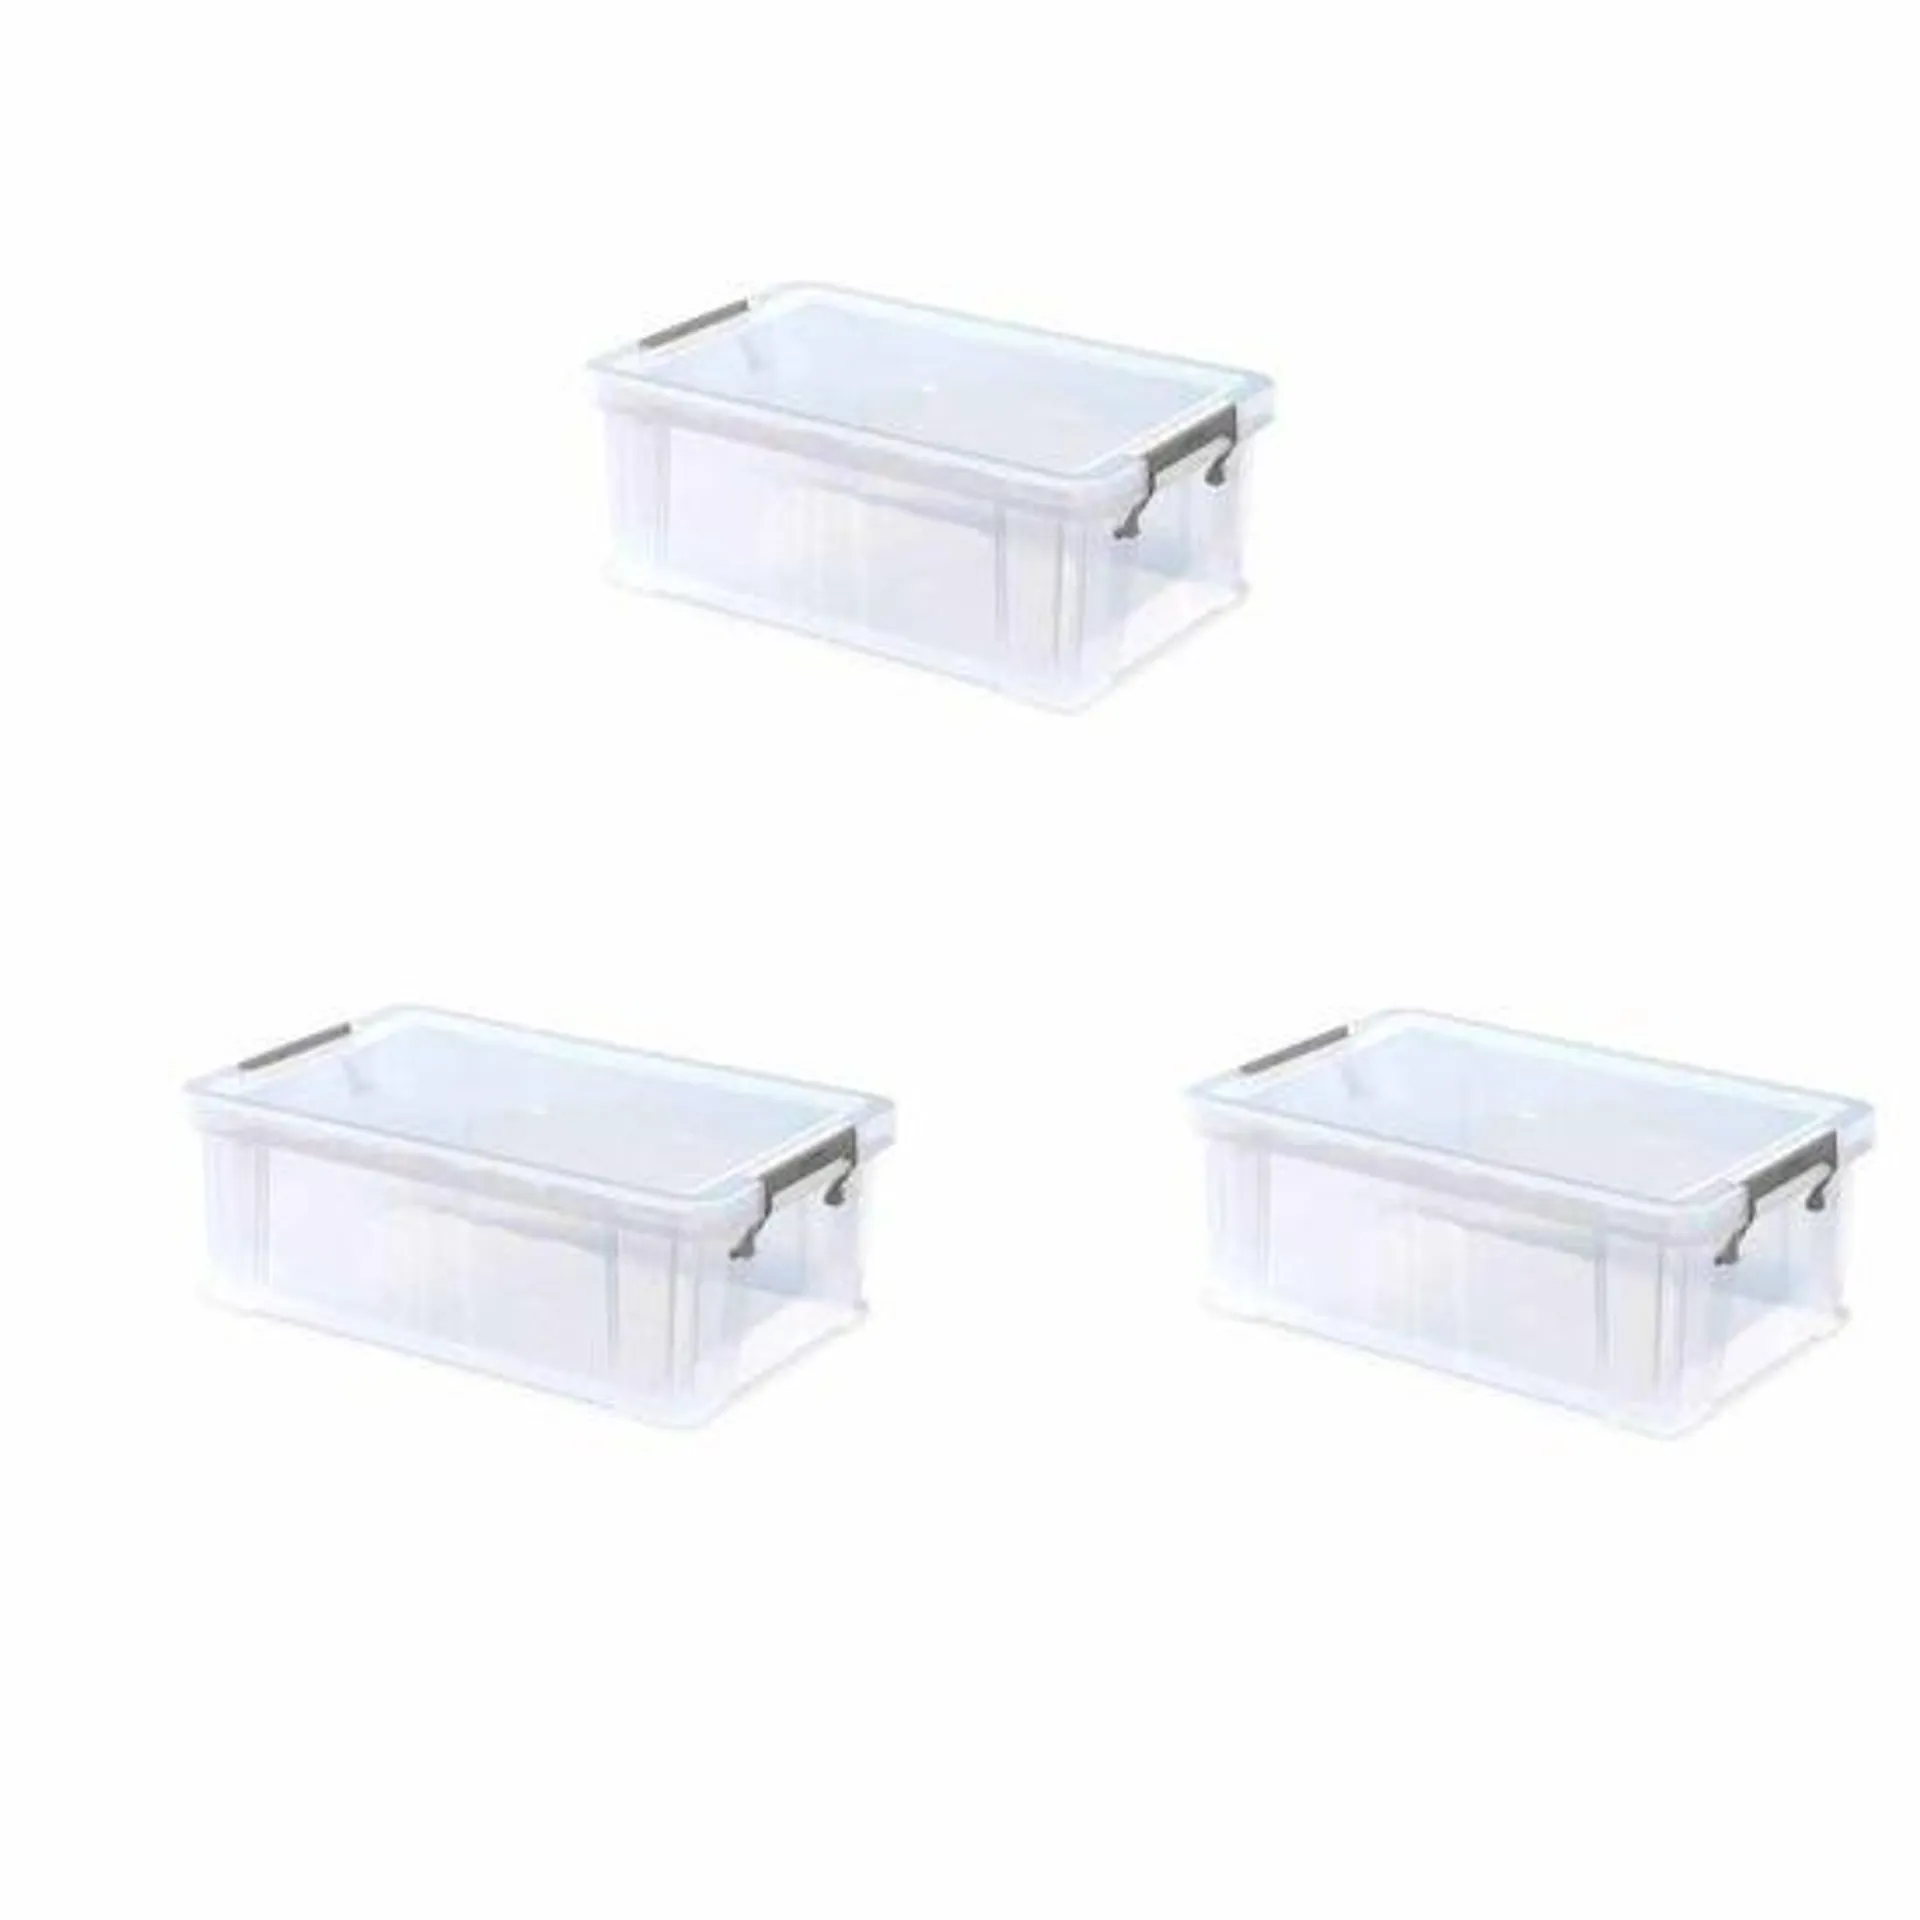 Whitefurze Allstore Plastic Storage Box 10 Litre Pack of 3